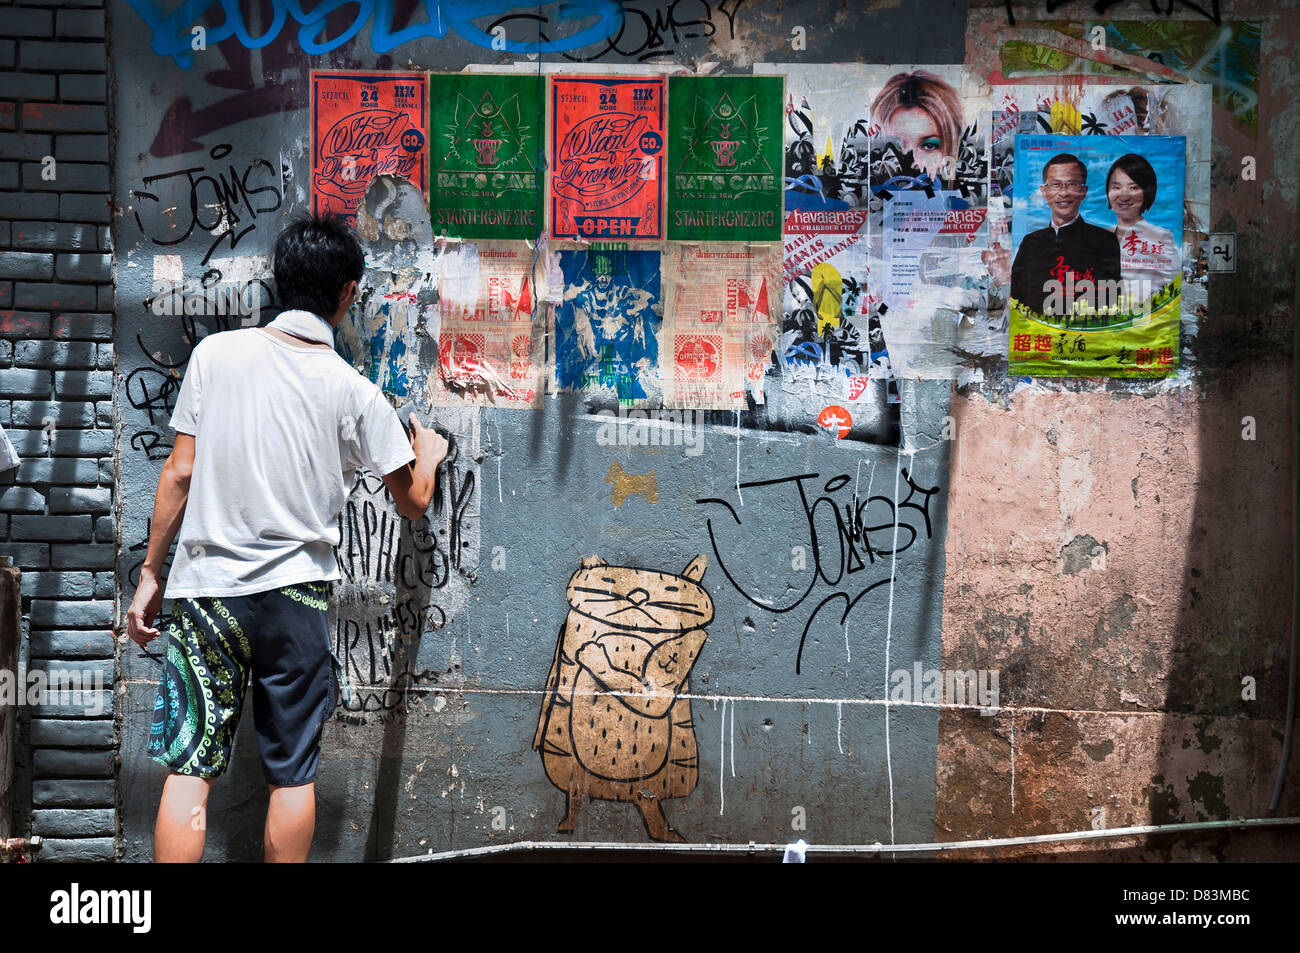 Hong kong wall posters hi-res stock photography and images - Alamy